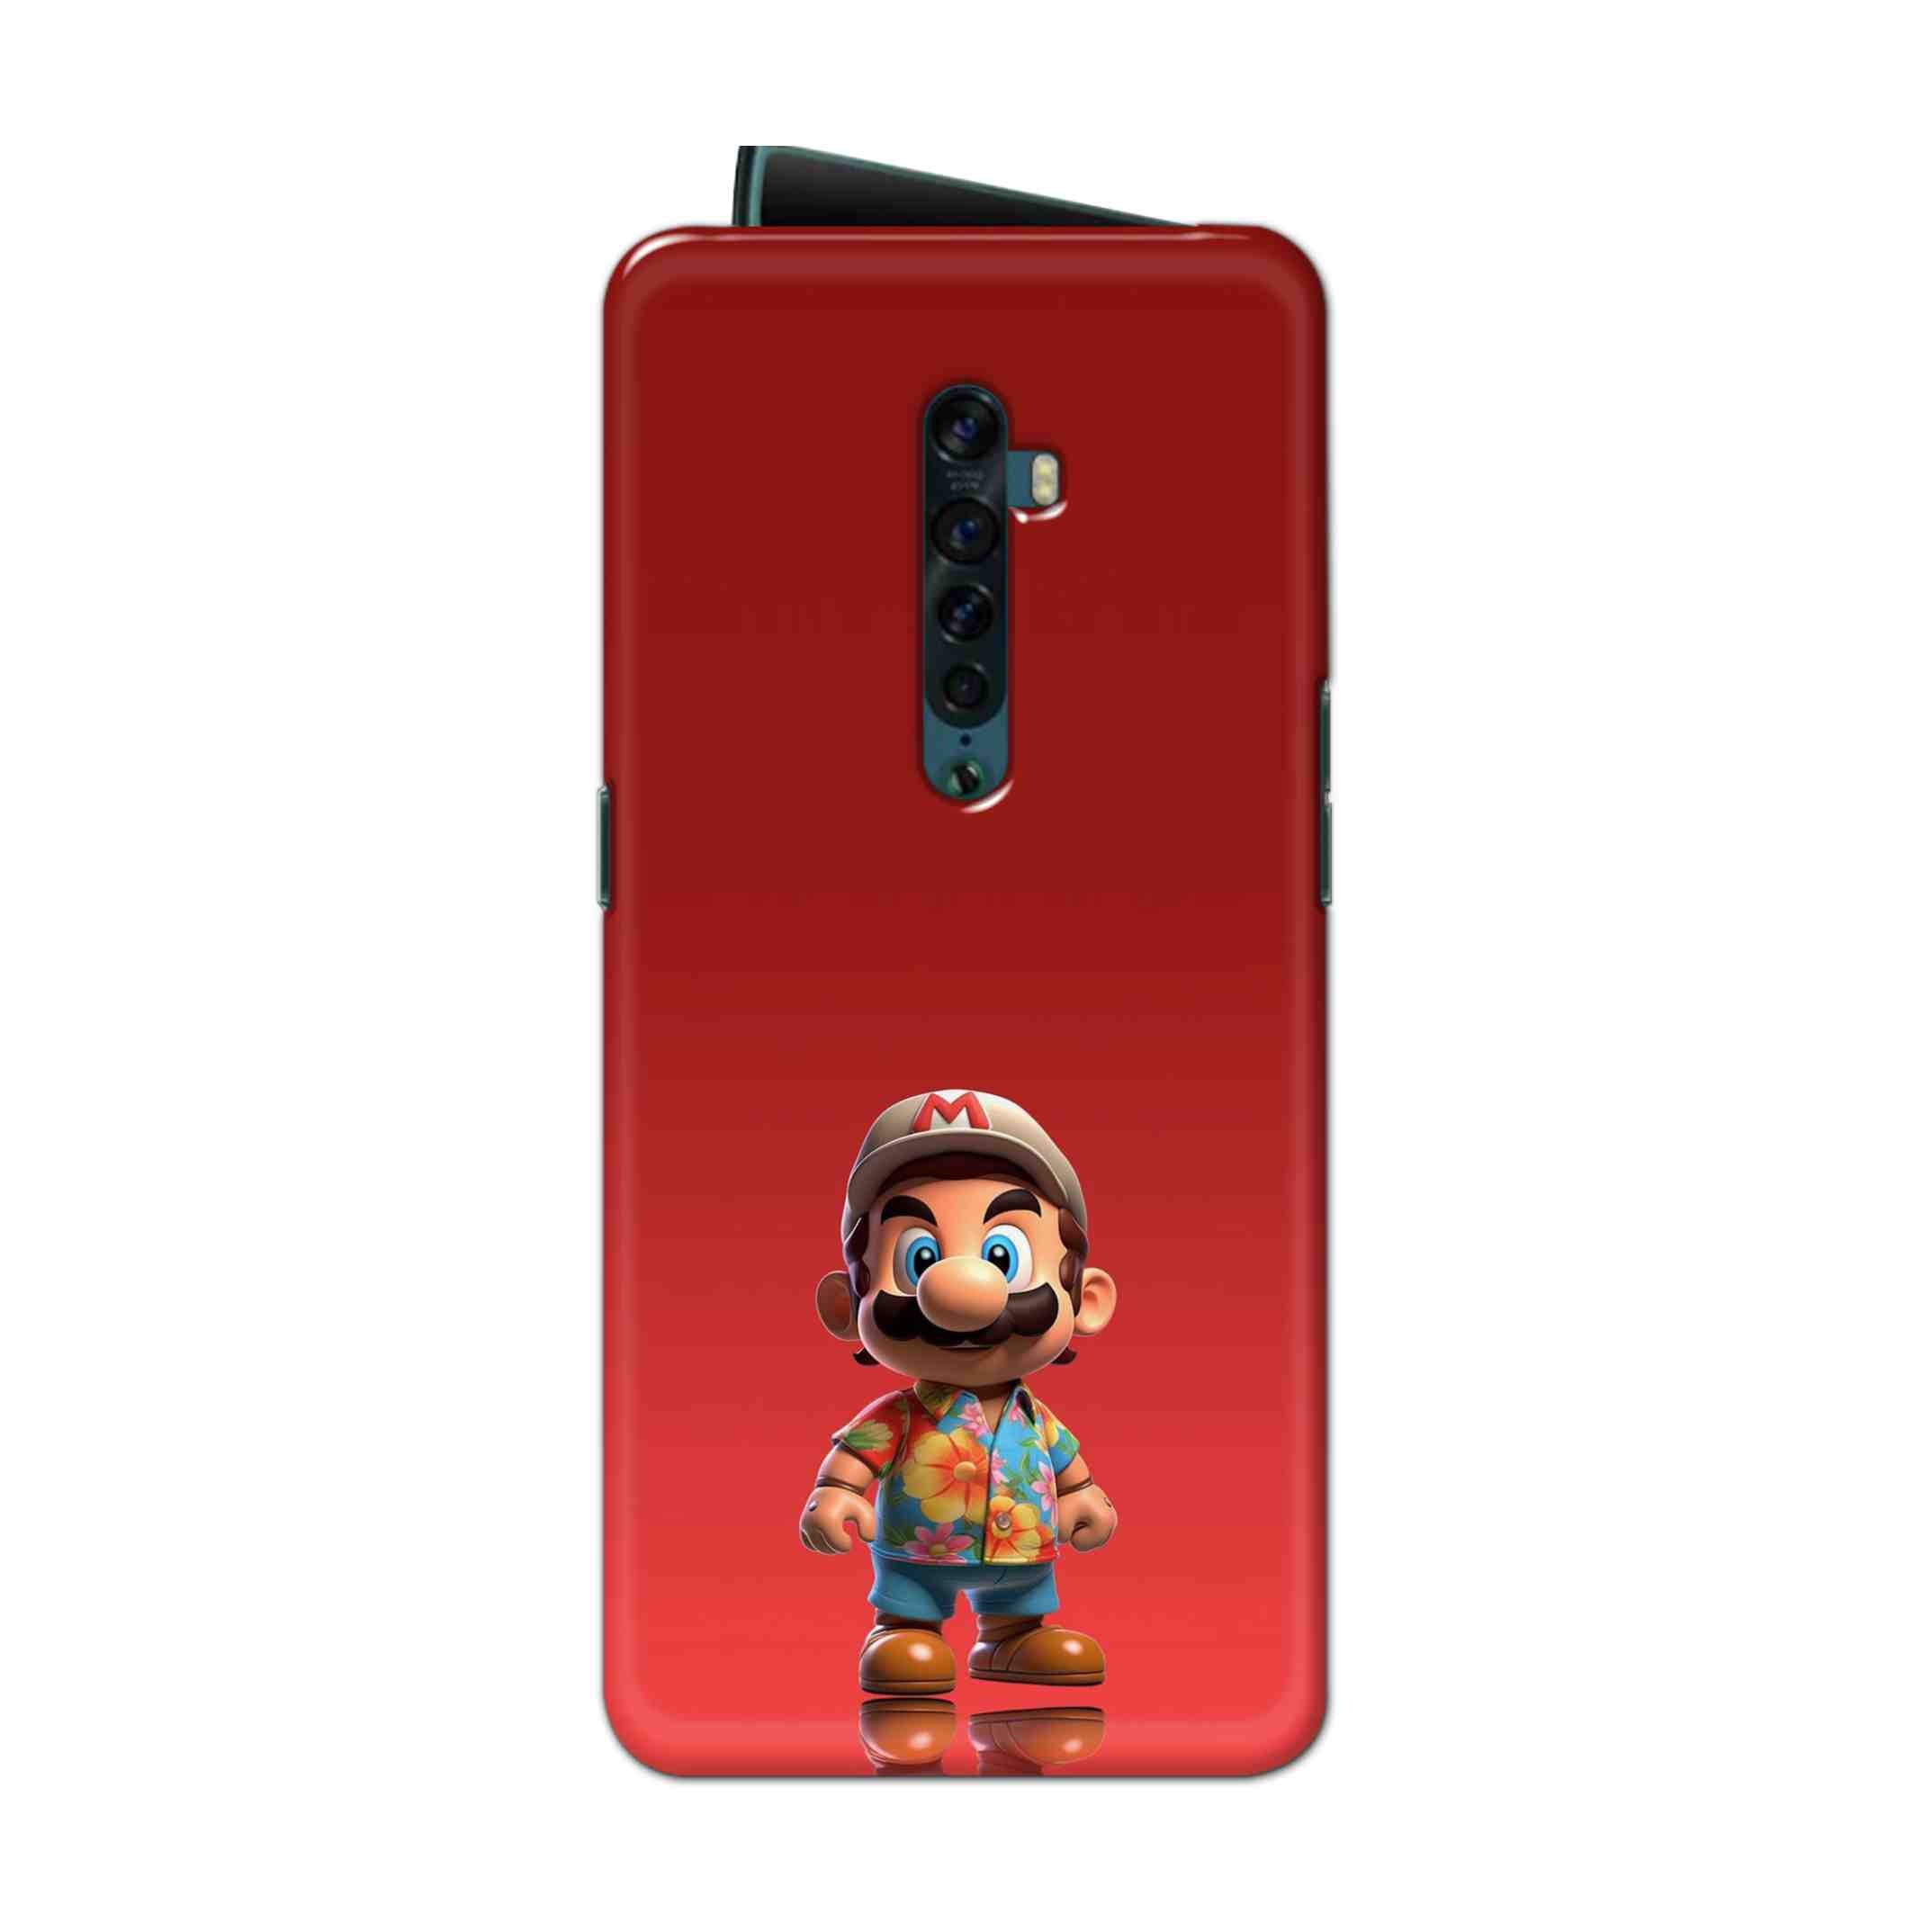 Buy Mario Hard Back Mobile Phone Case Cover For Oppo Reno 2 Online